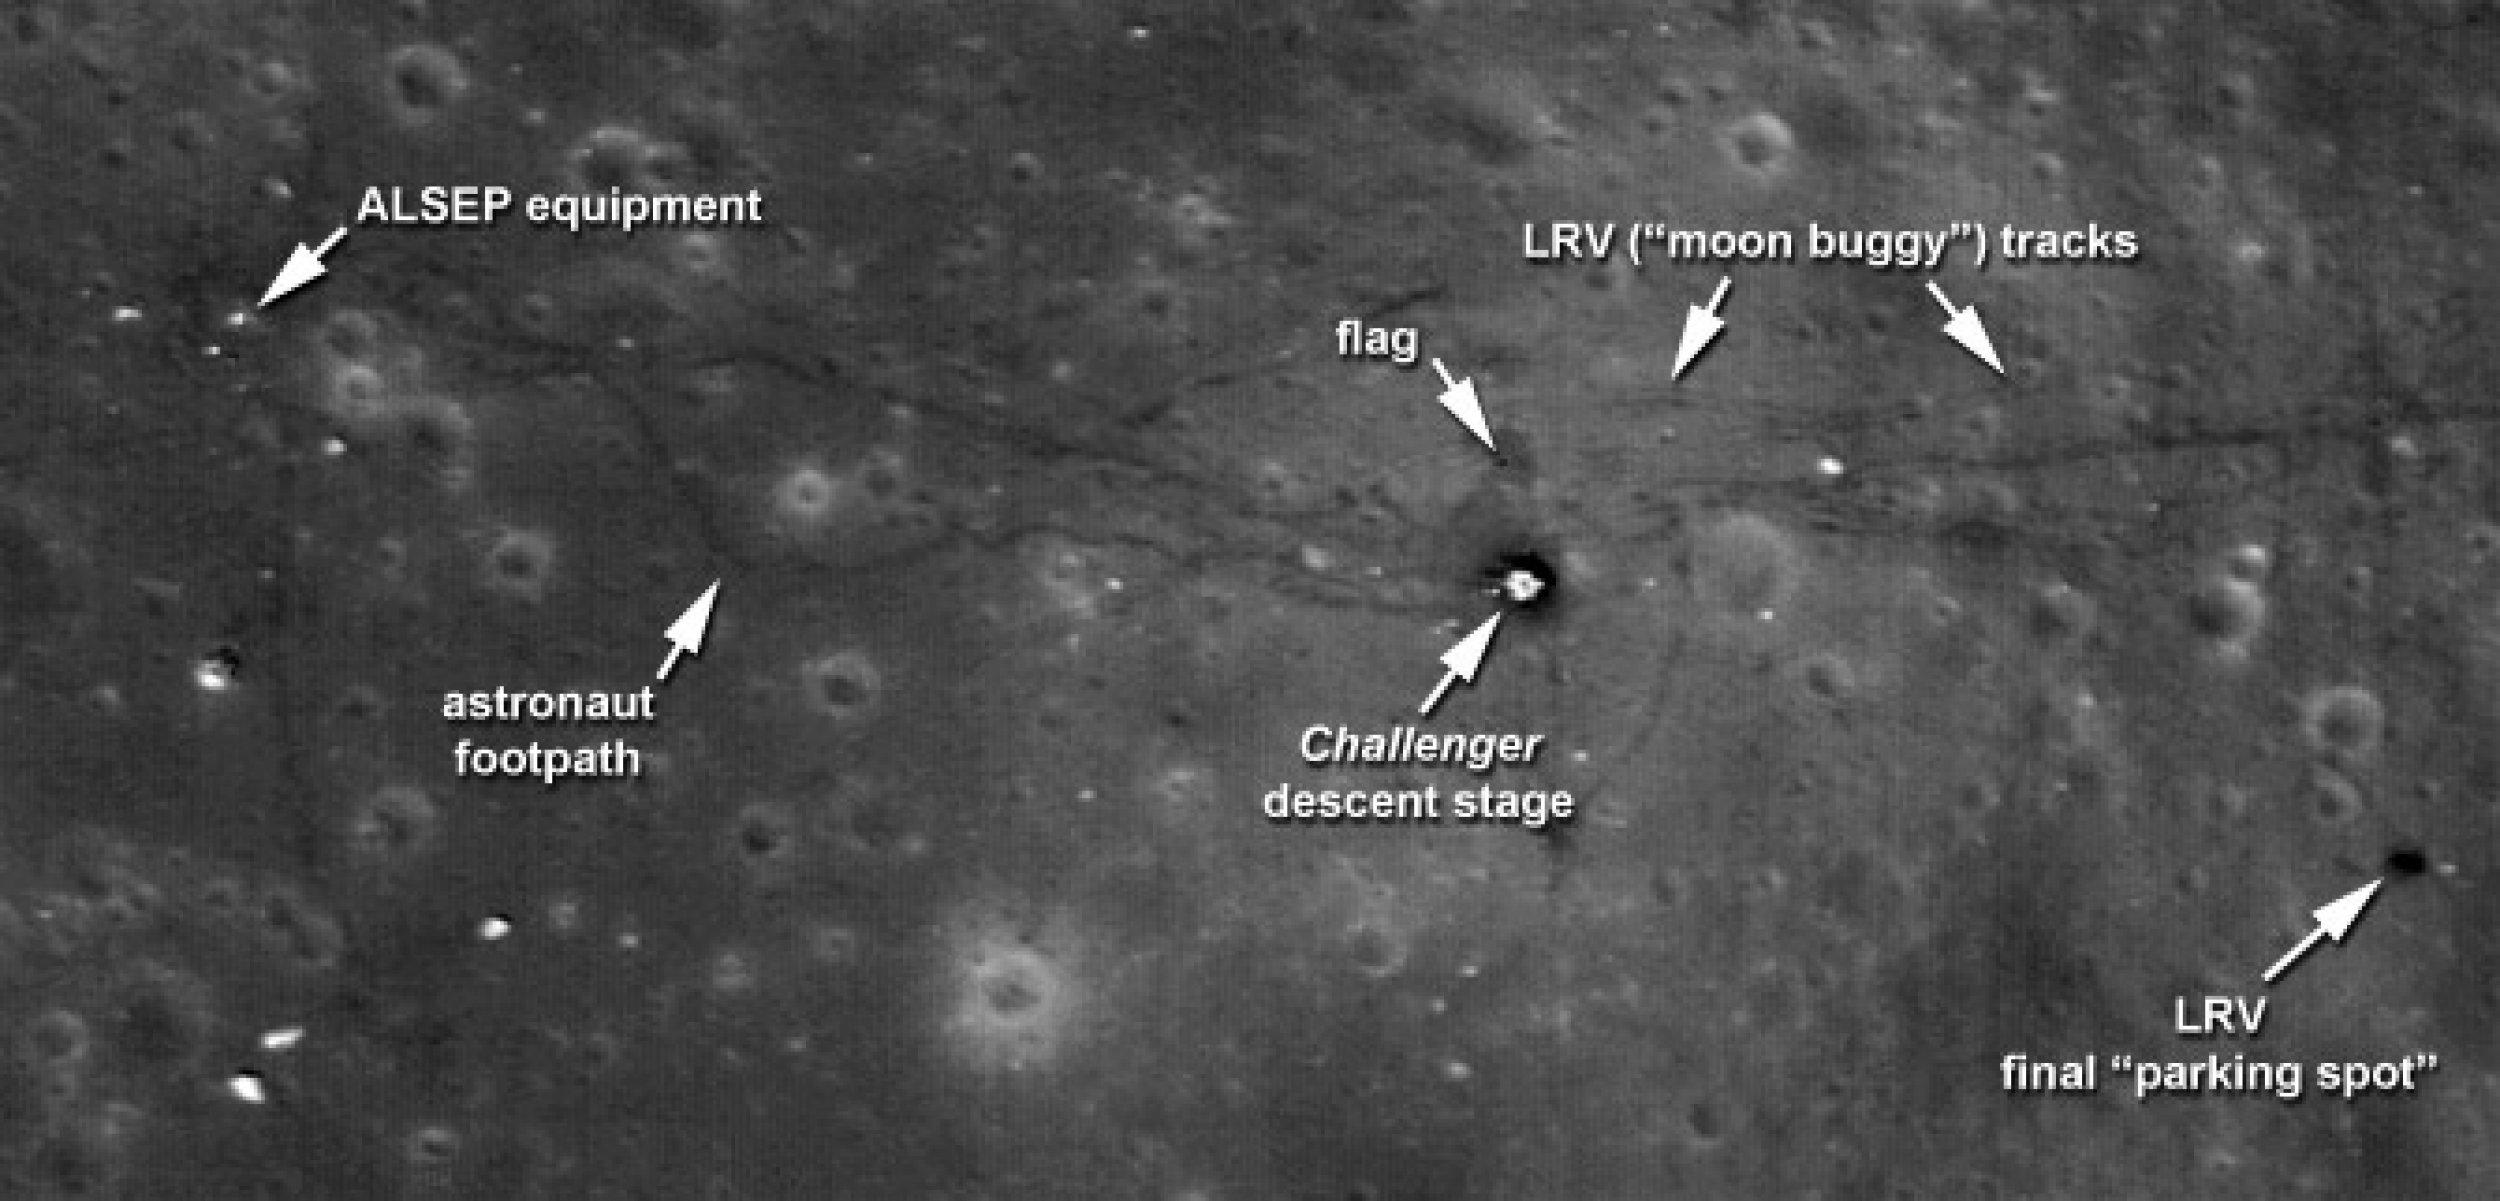 LRO image of the Apollo 17 landing site released in 2009